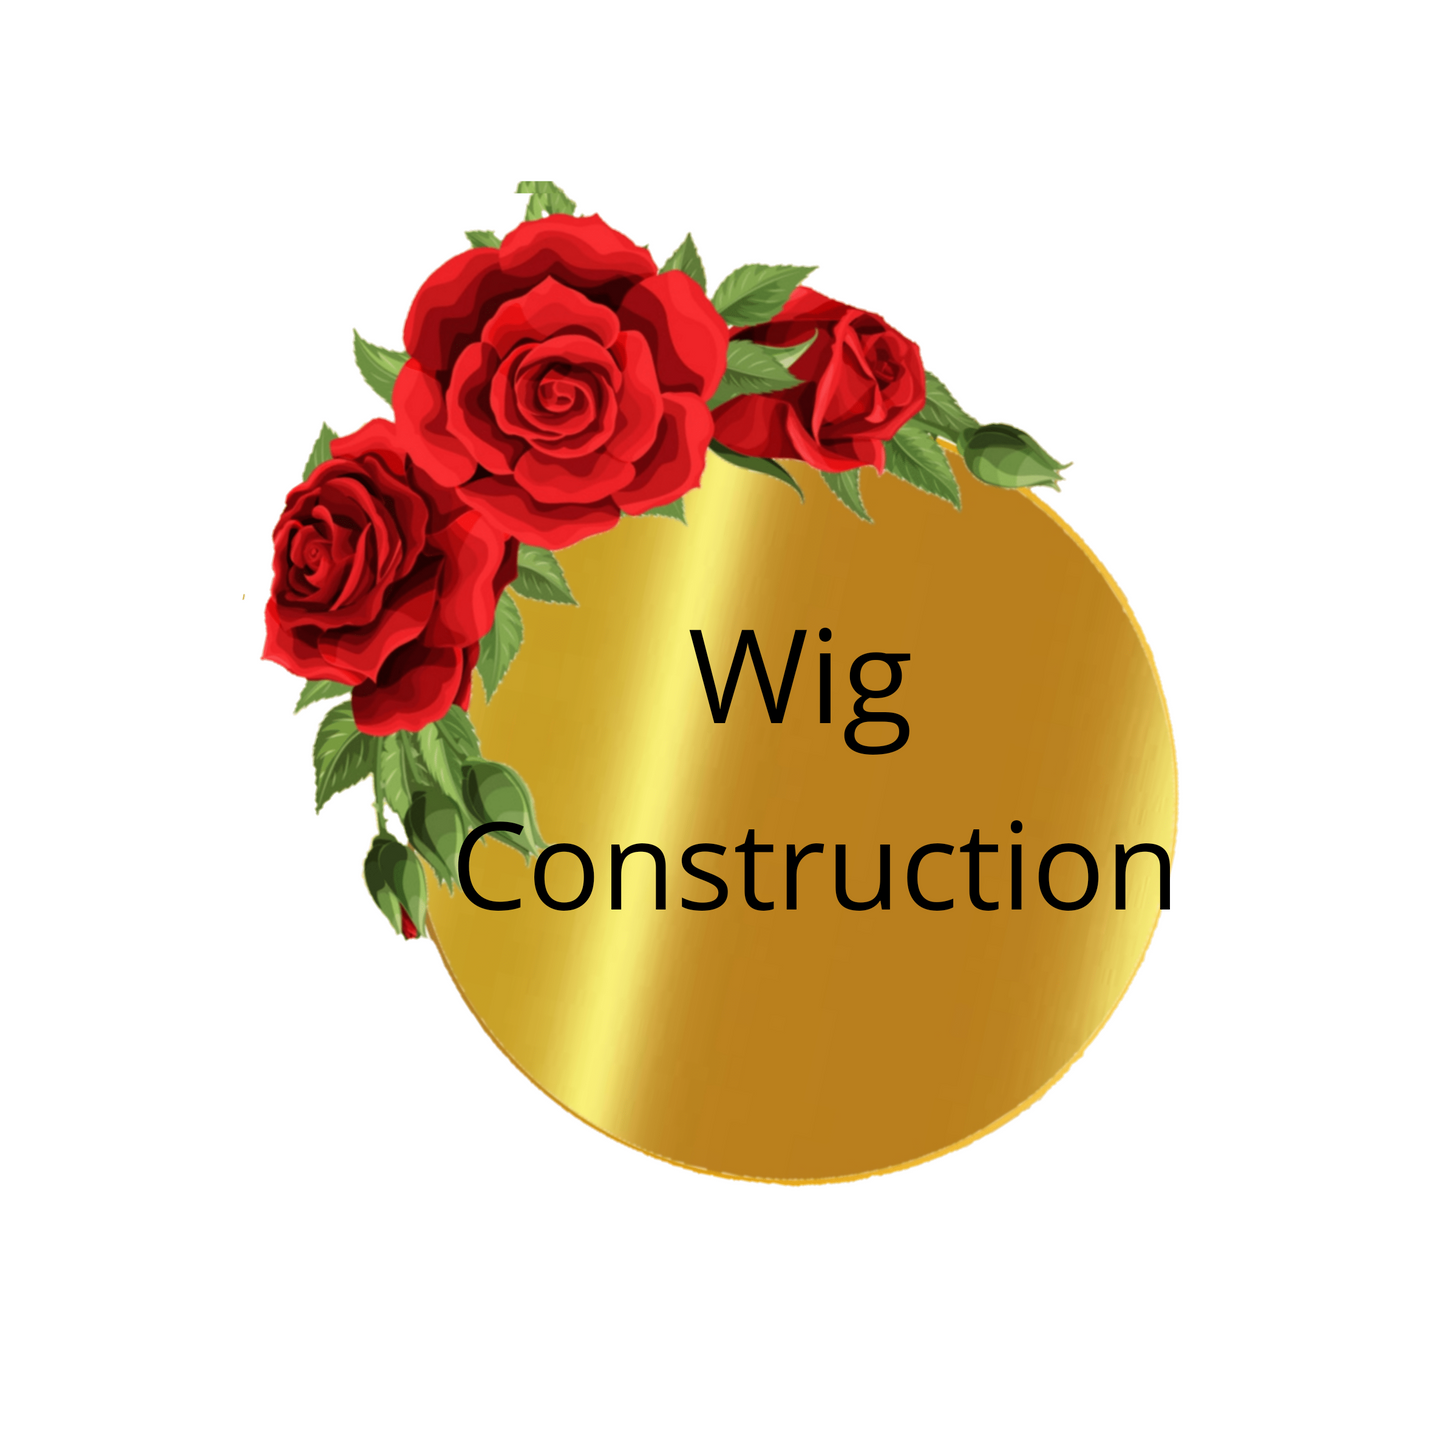 Wig Construction